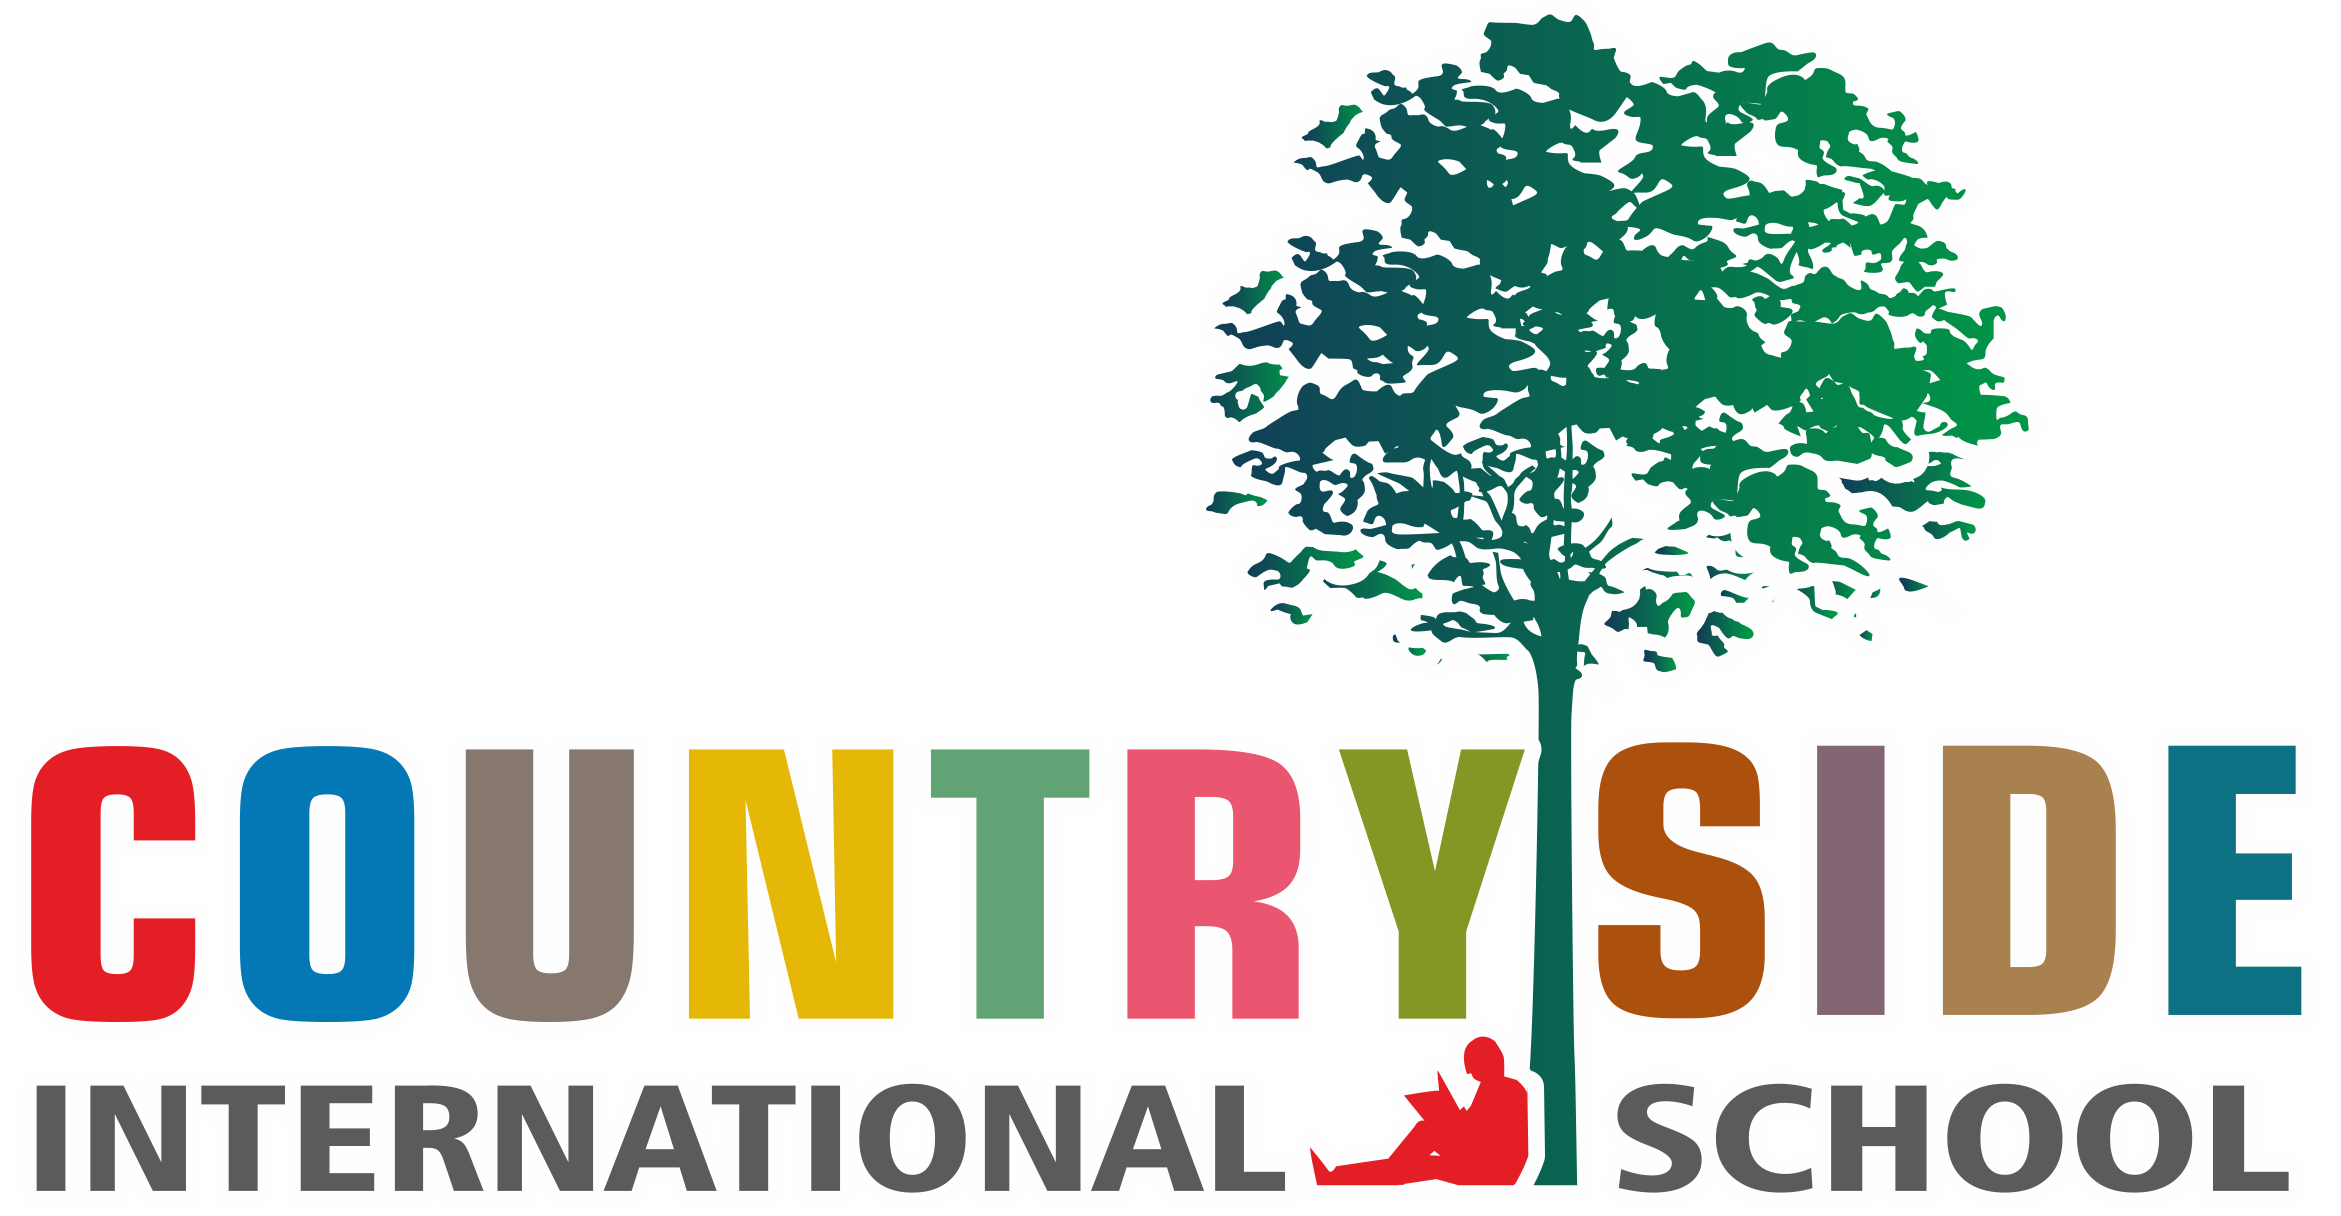 Website design for Country Side International School in Surat